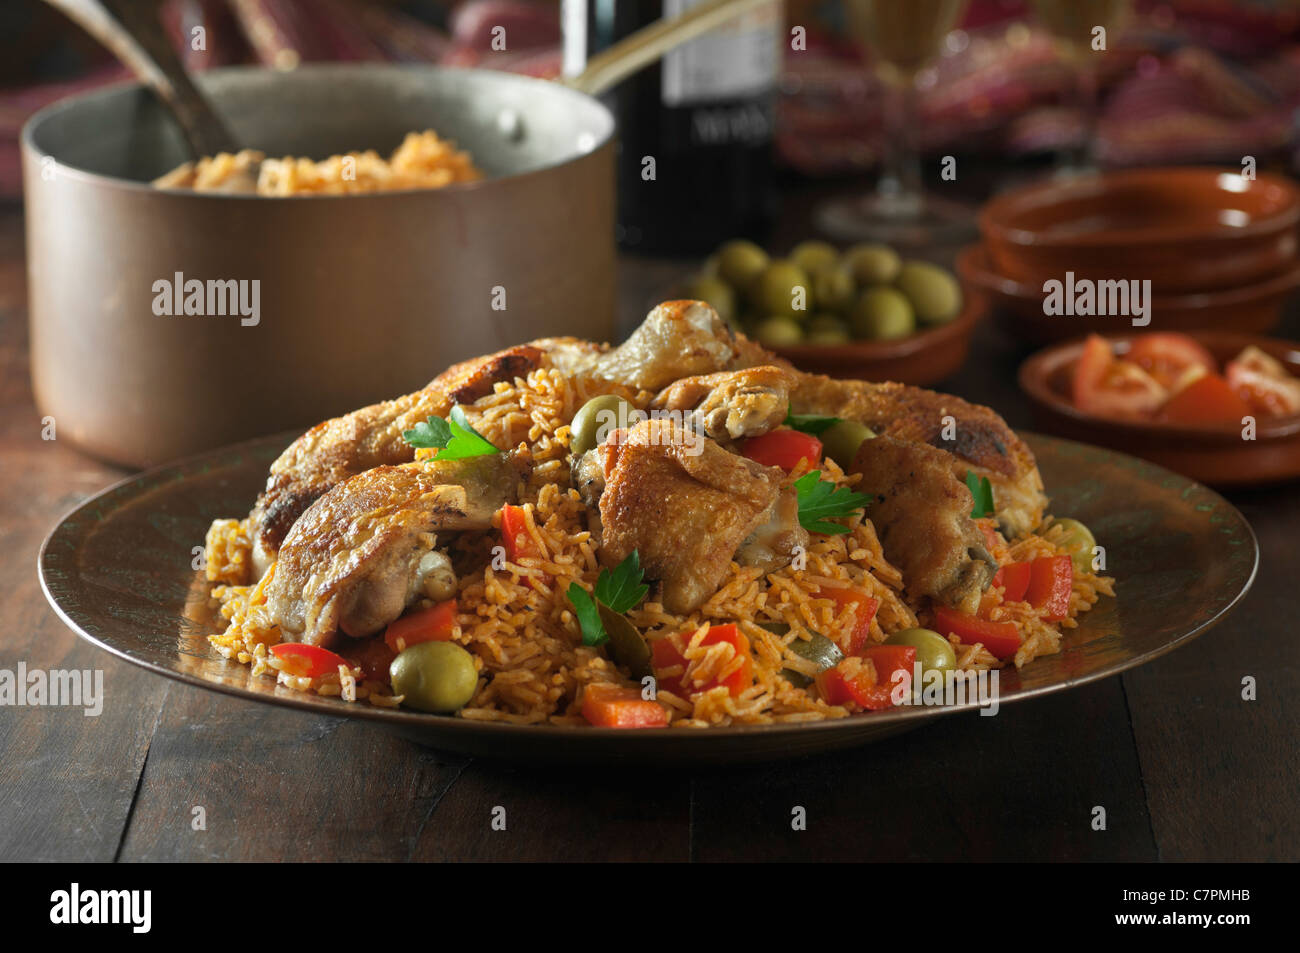 Arroz con pollo. Chicken with rice Stock Photo